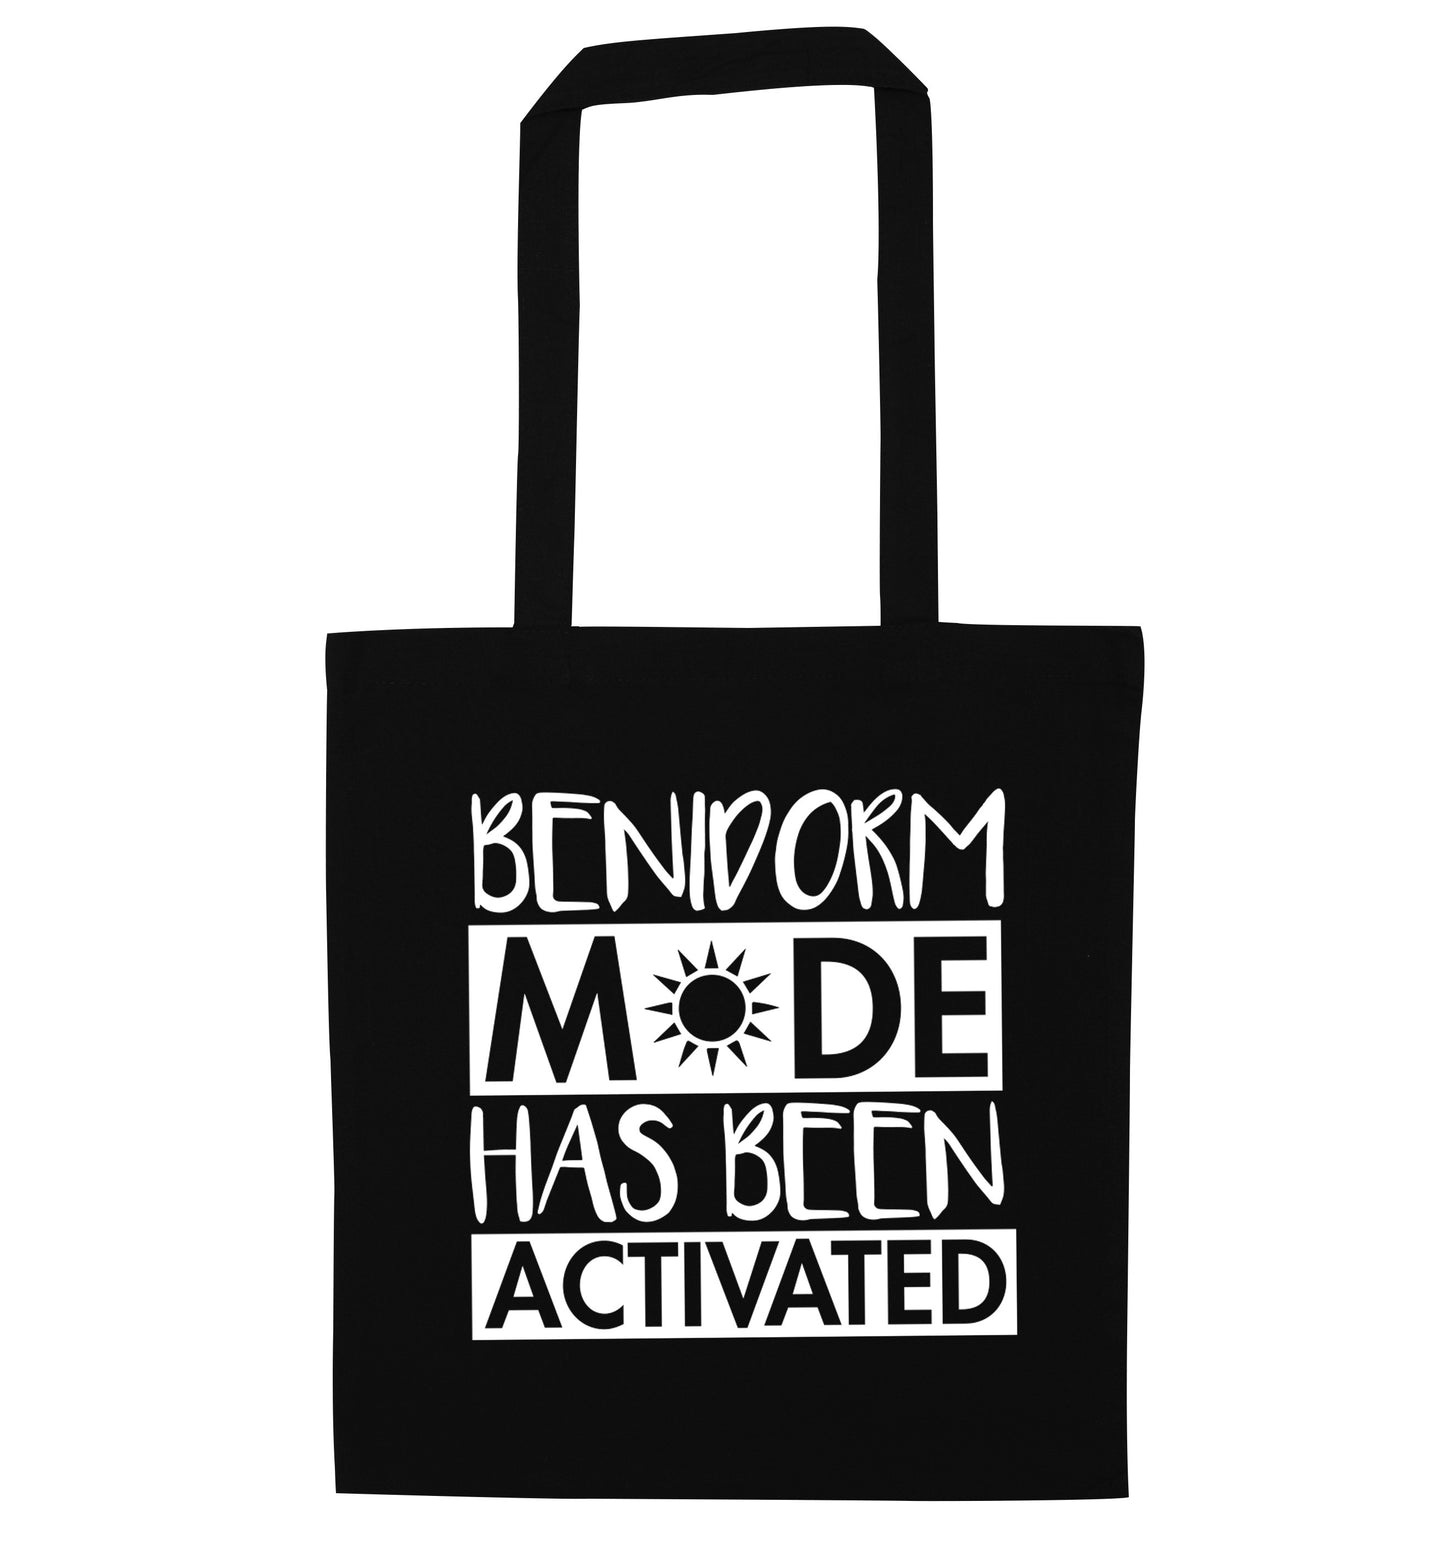 Benidorm mode has been activated black tote bag